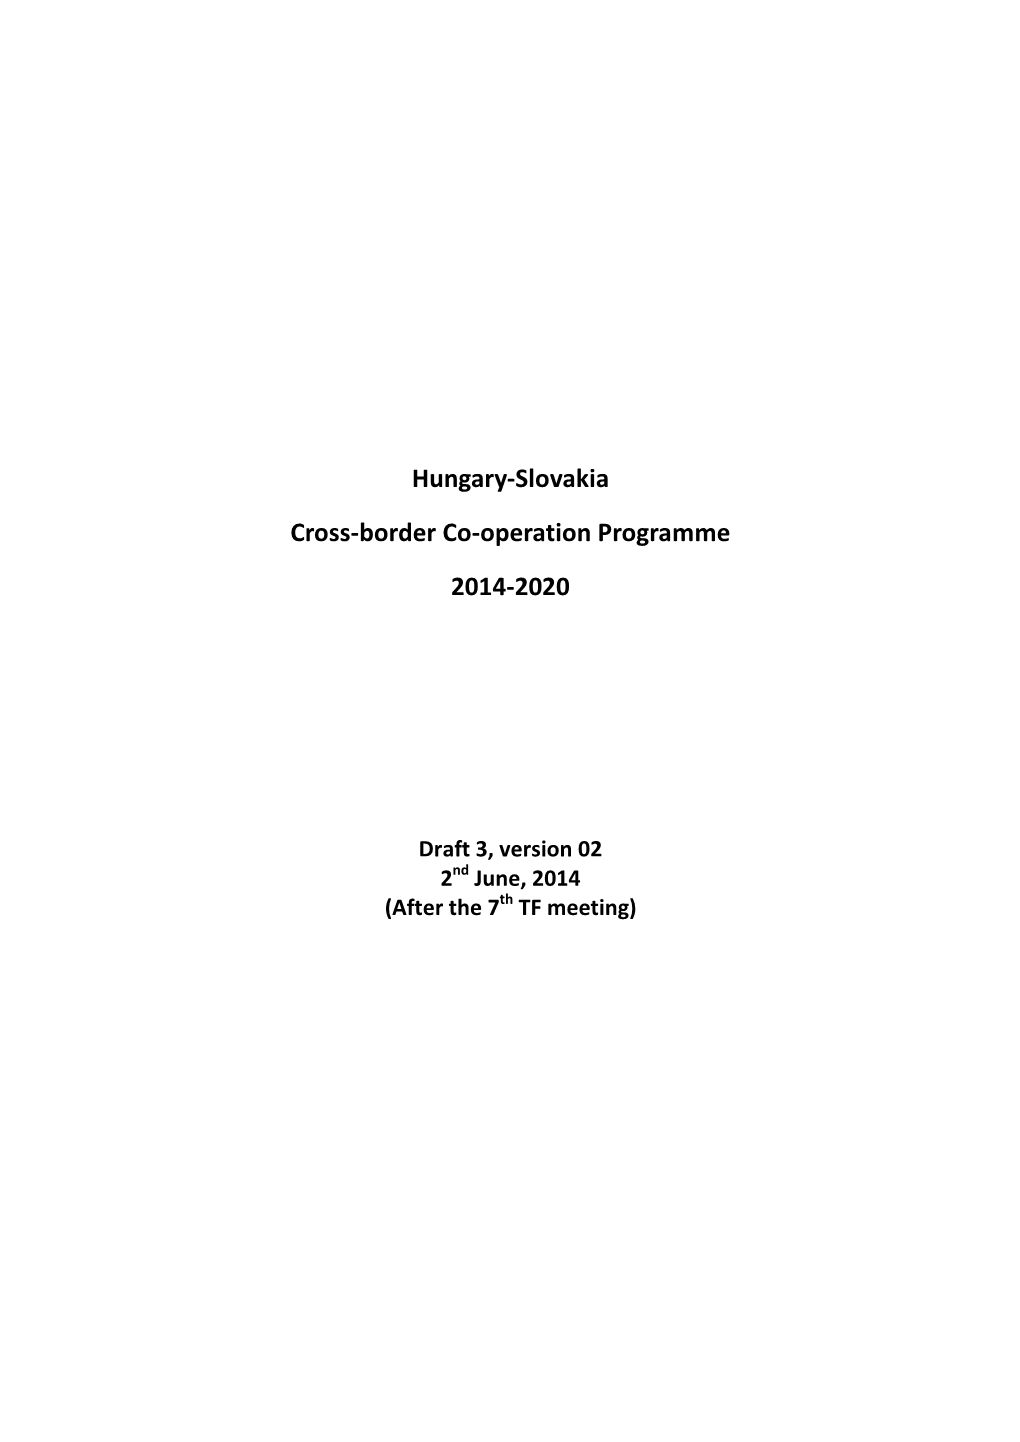 Hungary-Slovakia Cross-Border Co-Operation Programme 2014-2020